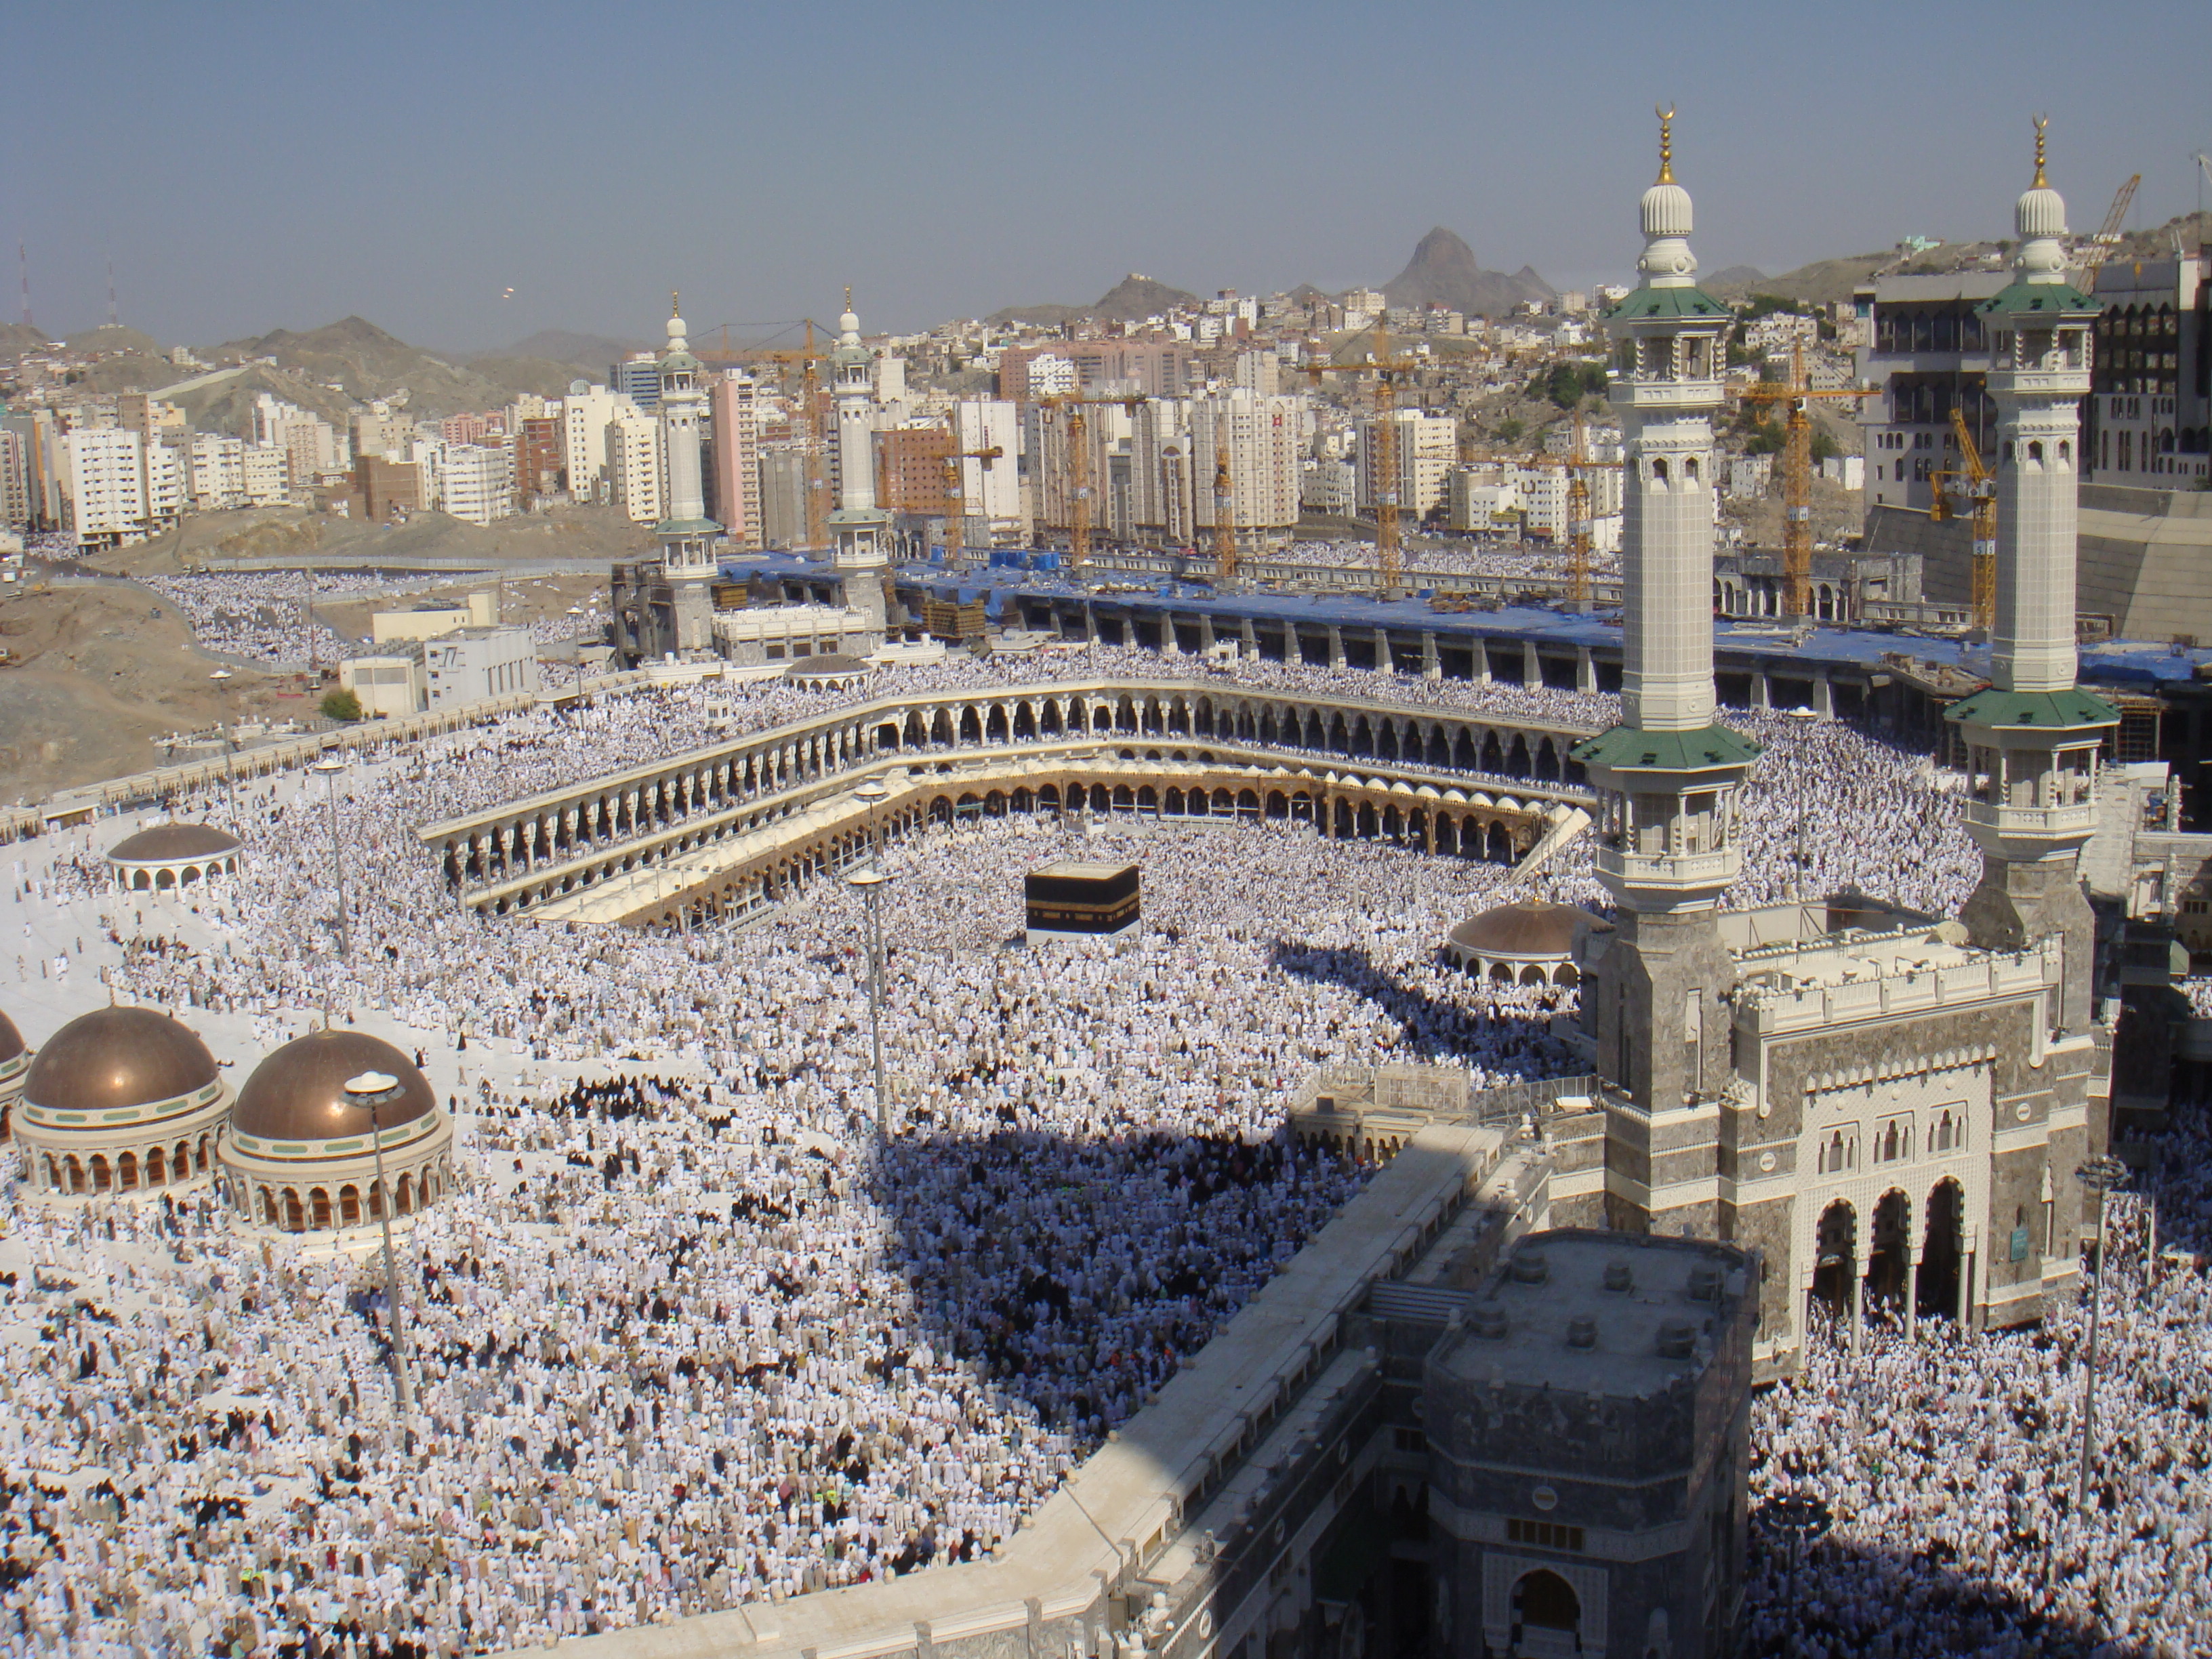 https://upload.wikimedia.org/wikipedia/commons/9/92/Al-Haram_mosque_-_Flickr_-_Al_Jazeera_English.jpg